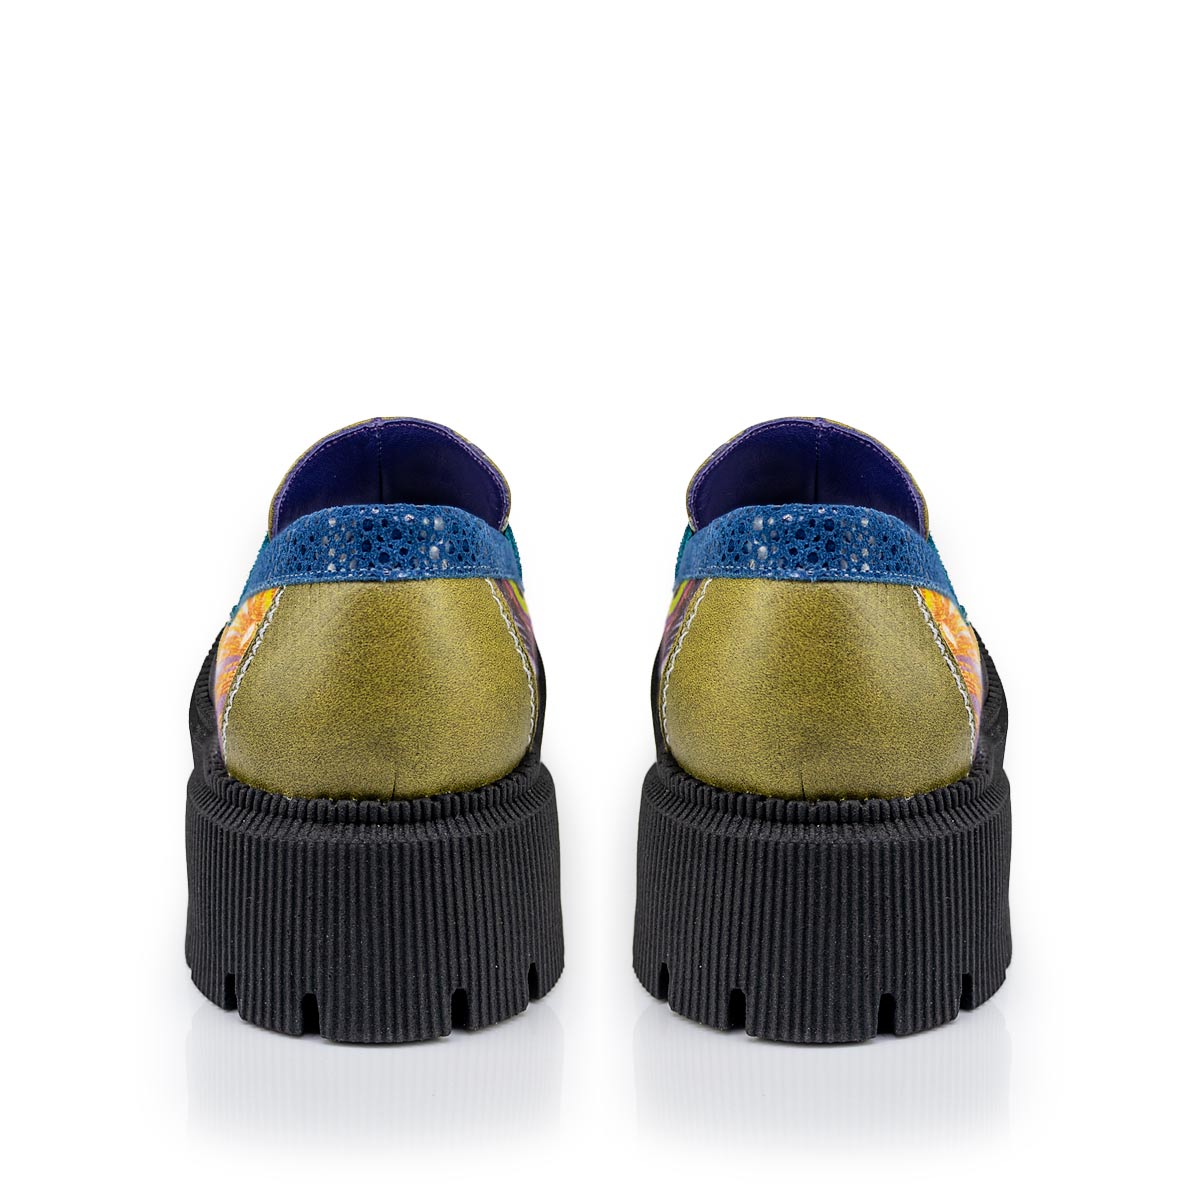 Peacock Star Women's Shoe